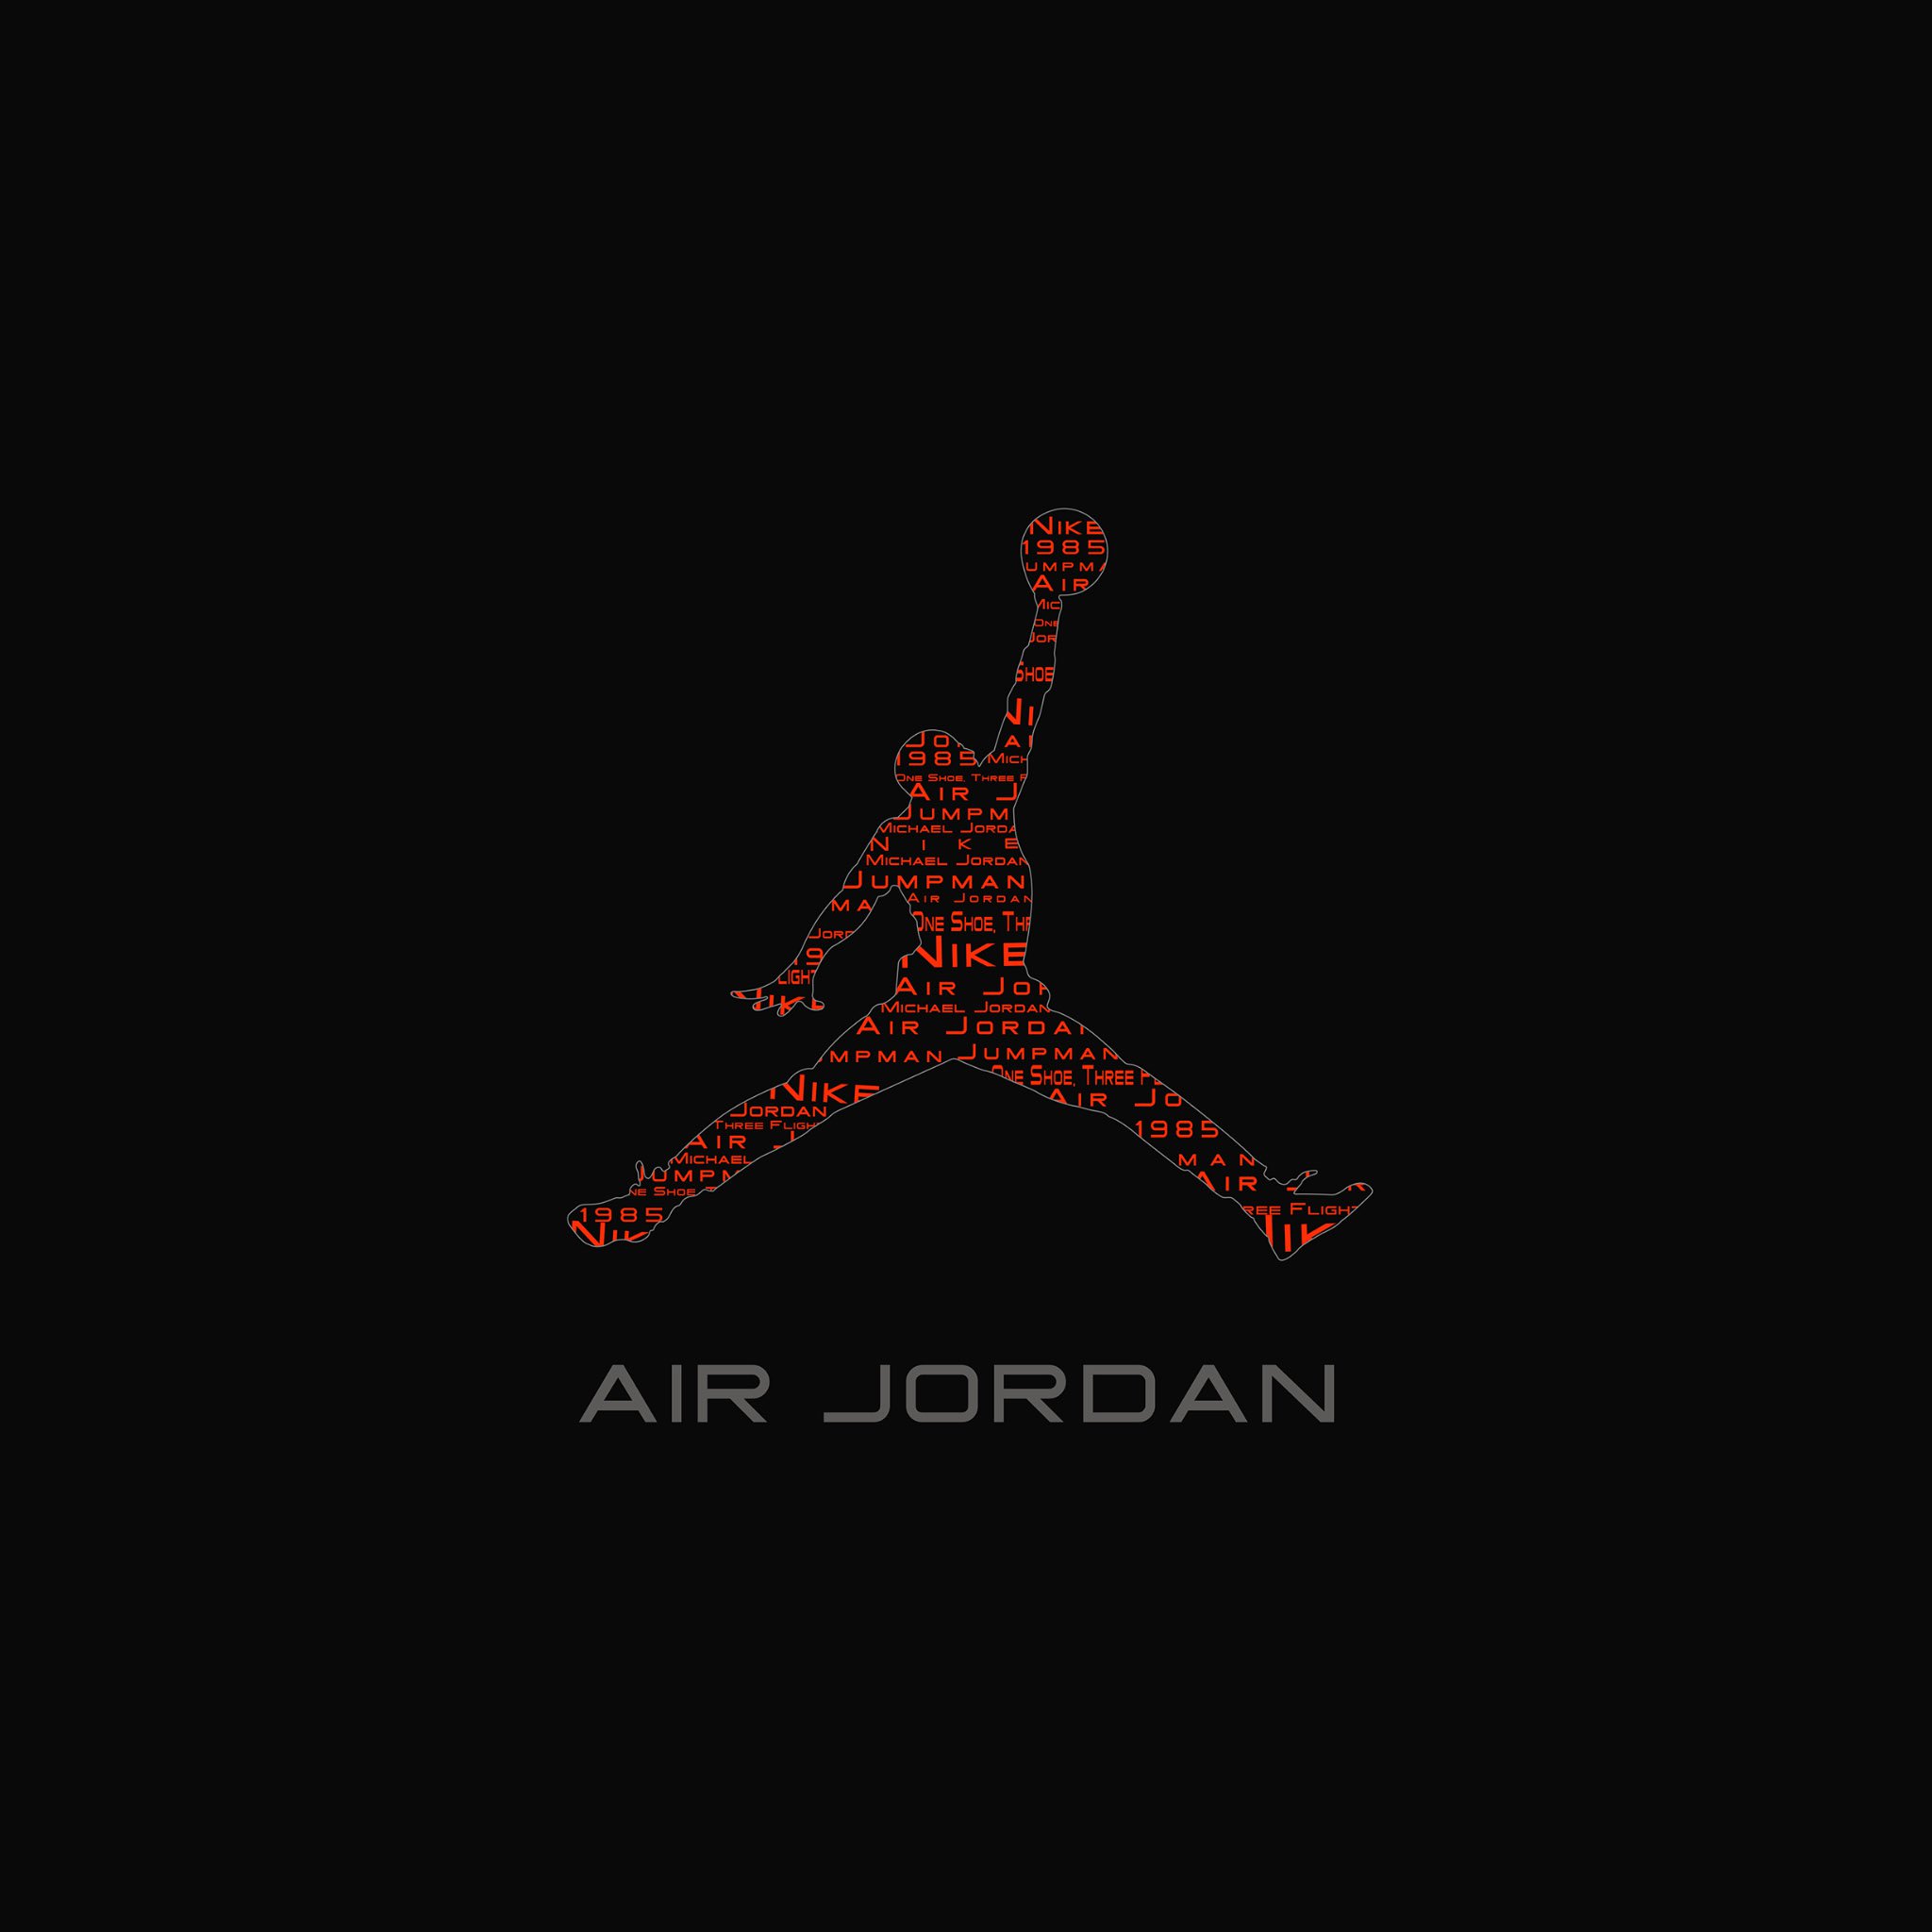 Fotos Wallpaper Logos Jordan Puter Image